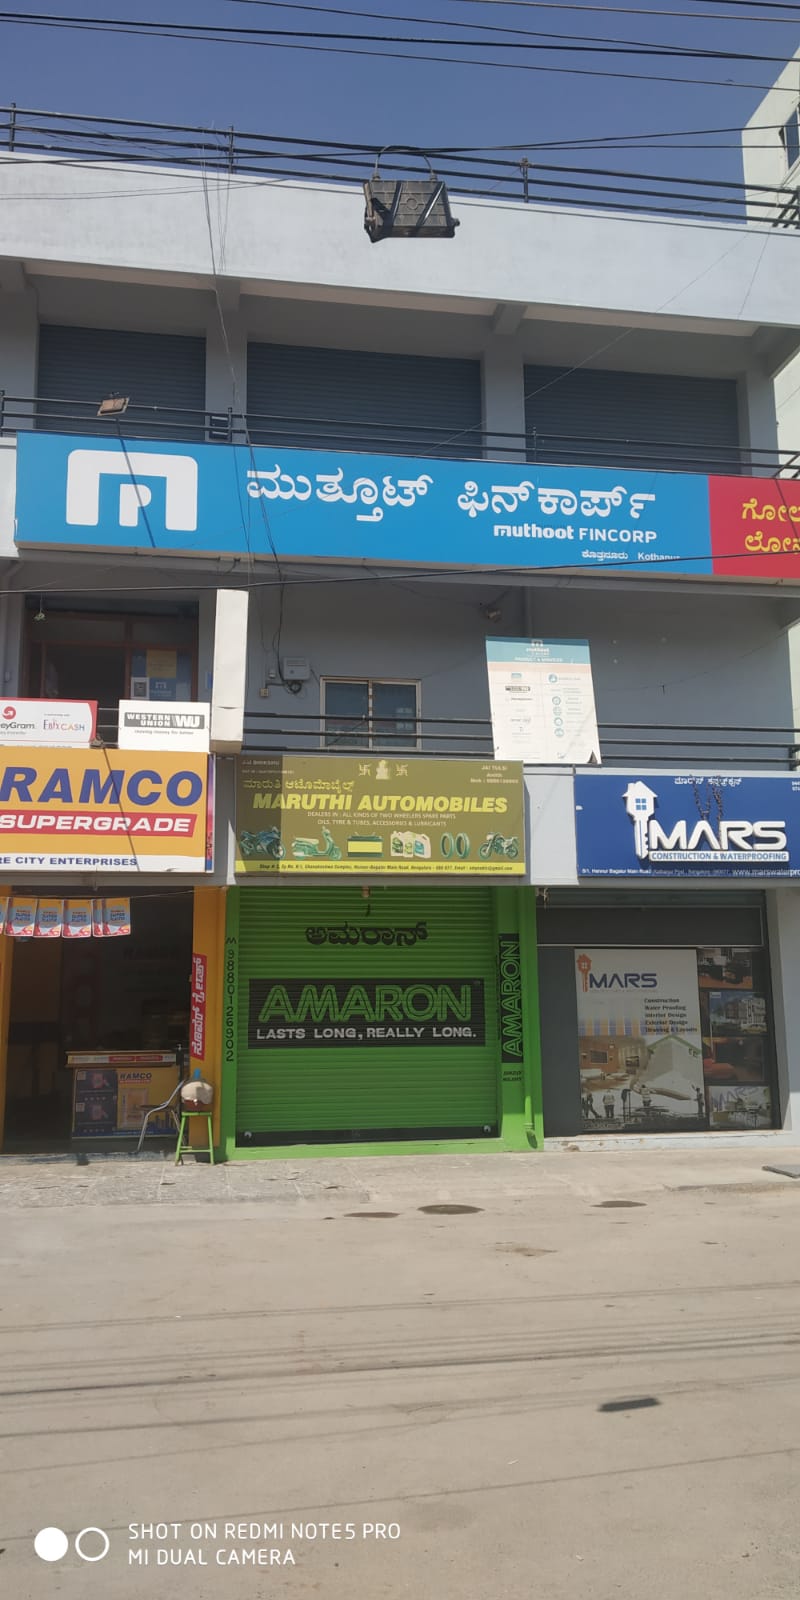 Muthoot Fincorp Gold Loan Services in Kothanur, Bengaluru, Karnataka